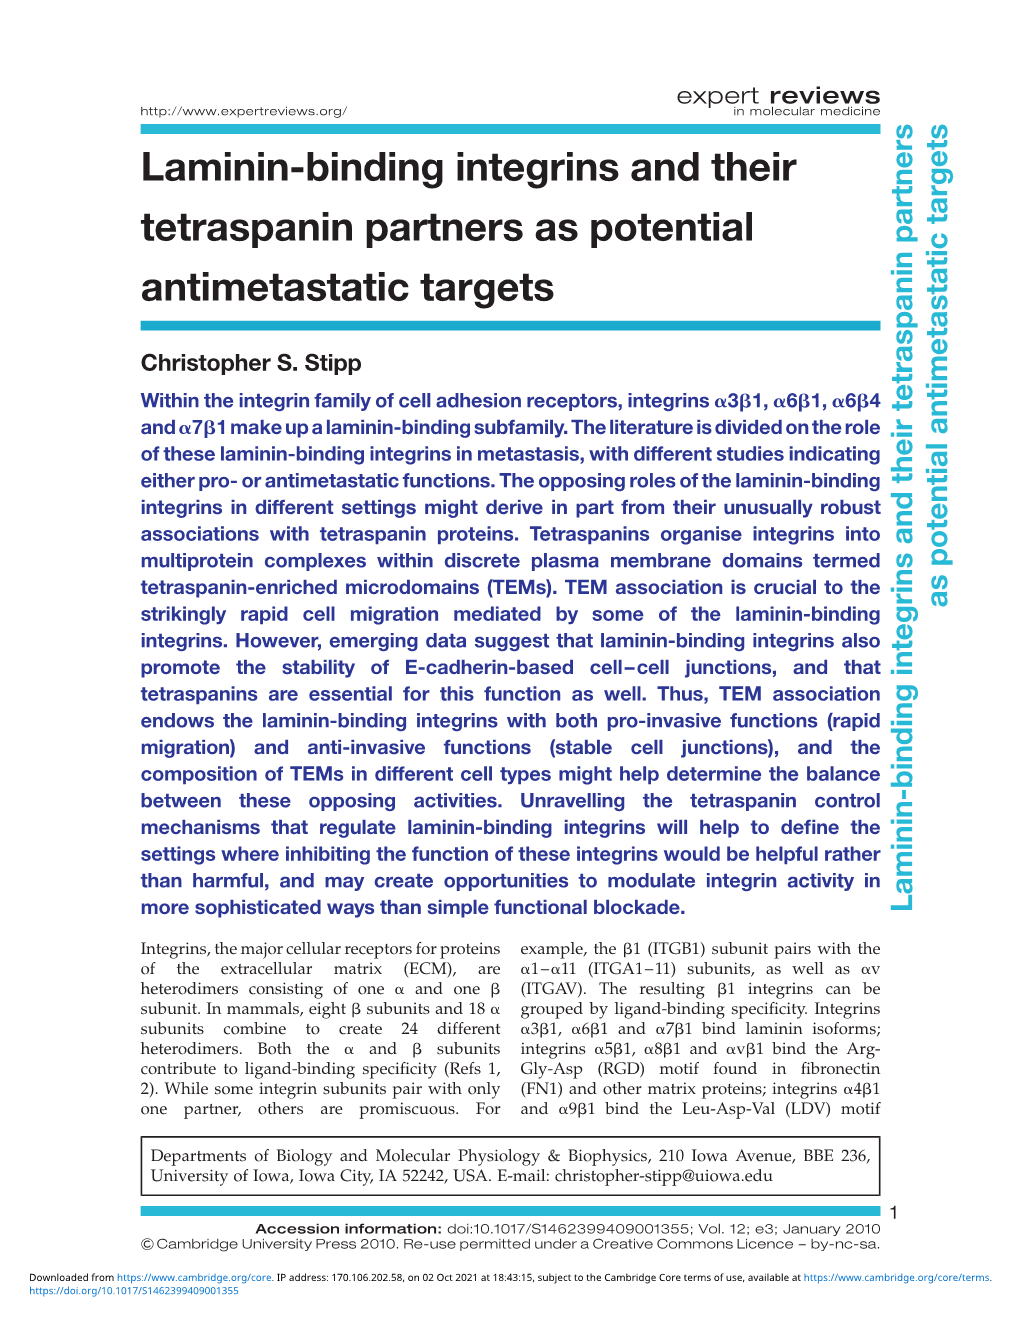 Laminin-Binding Integrins and Their Tetraspanin Partners As Potential Antimetastatic Targets